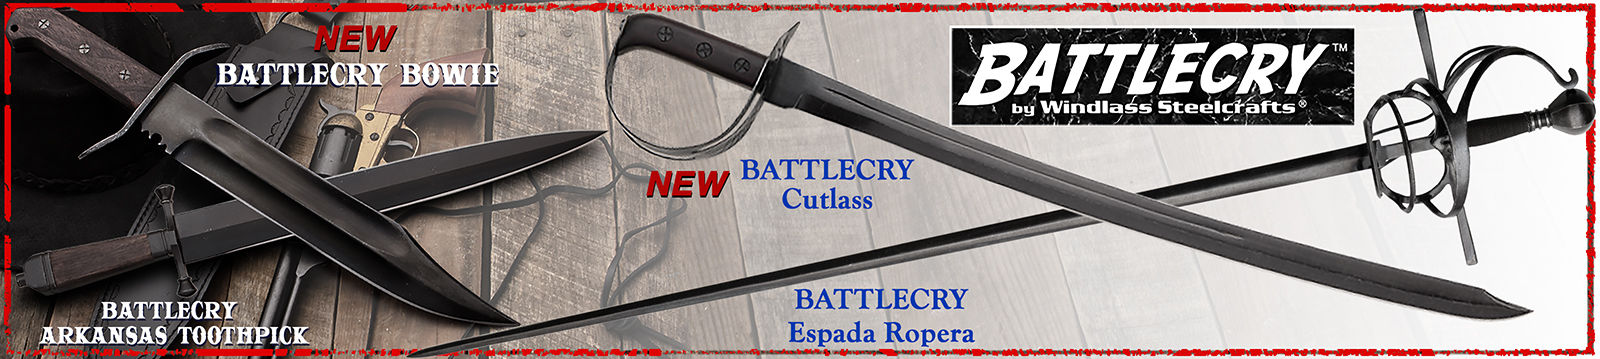 Battlecry by Windlass Steelcrafts Espada Ropera and Arkansas Toothpick